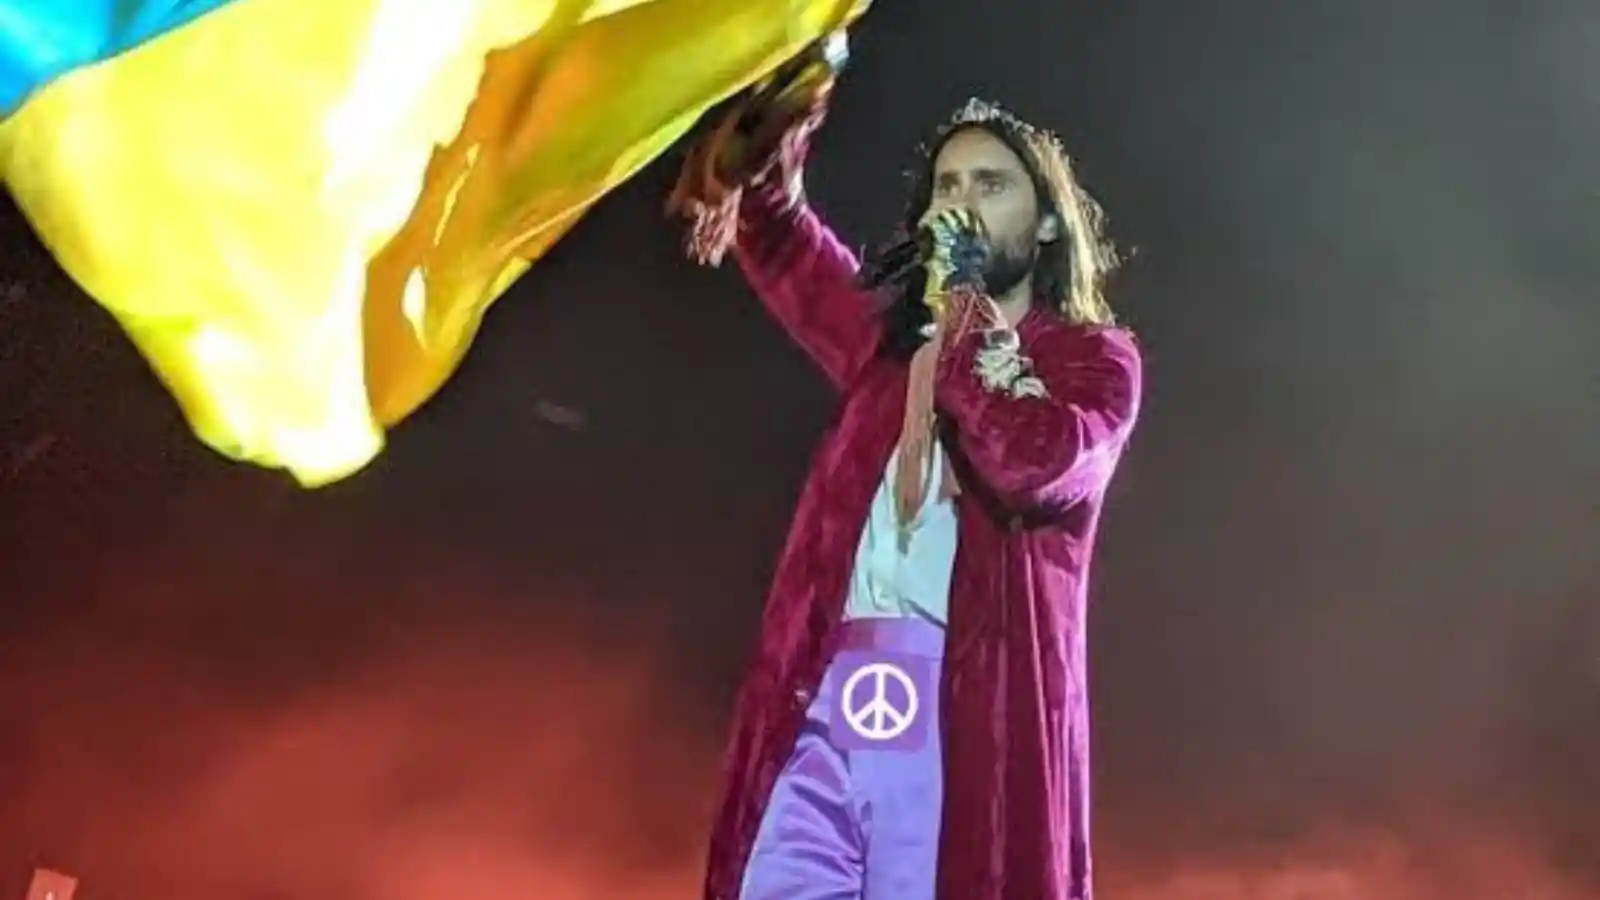 During a concert in Ukraine